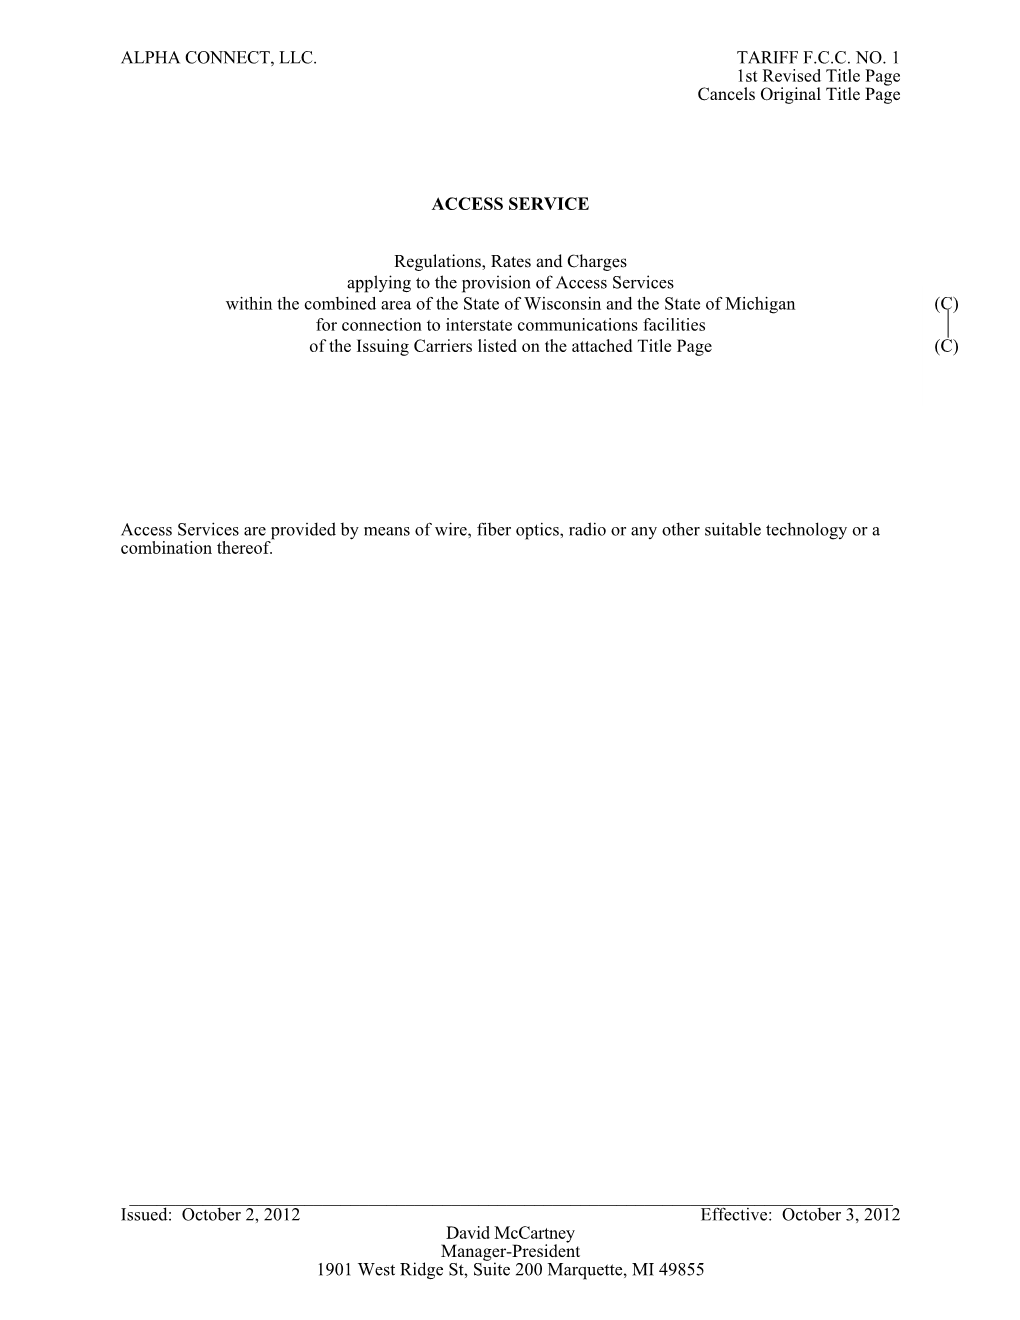 ALPHA CONNECT, LLC. TARIFF FCC NO. 1 1St Revised Title Page